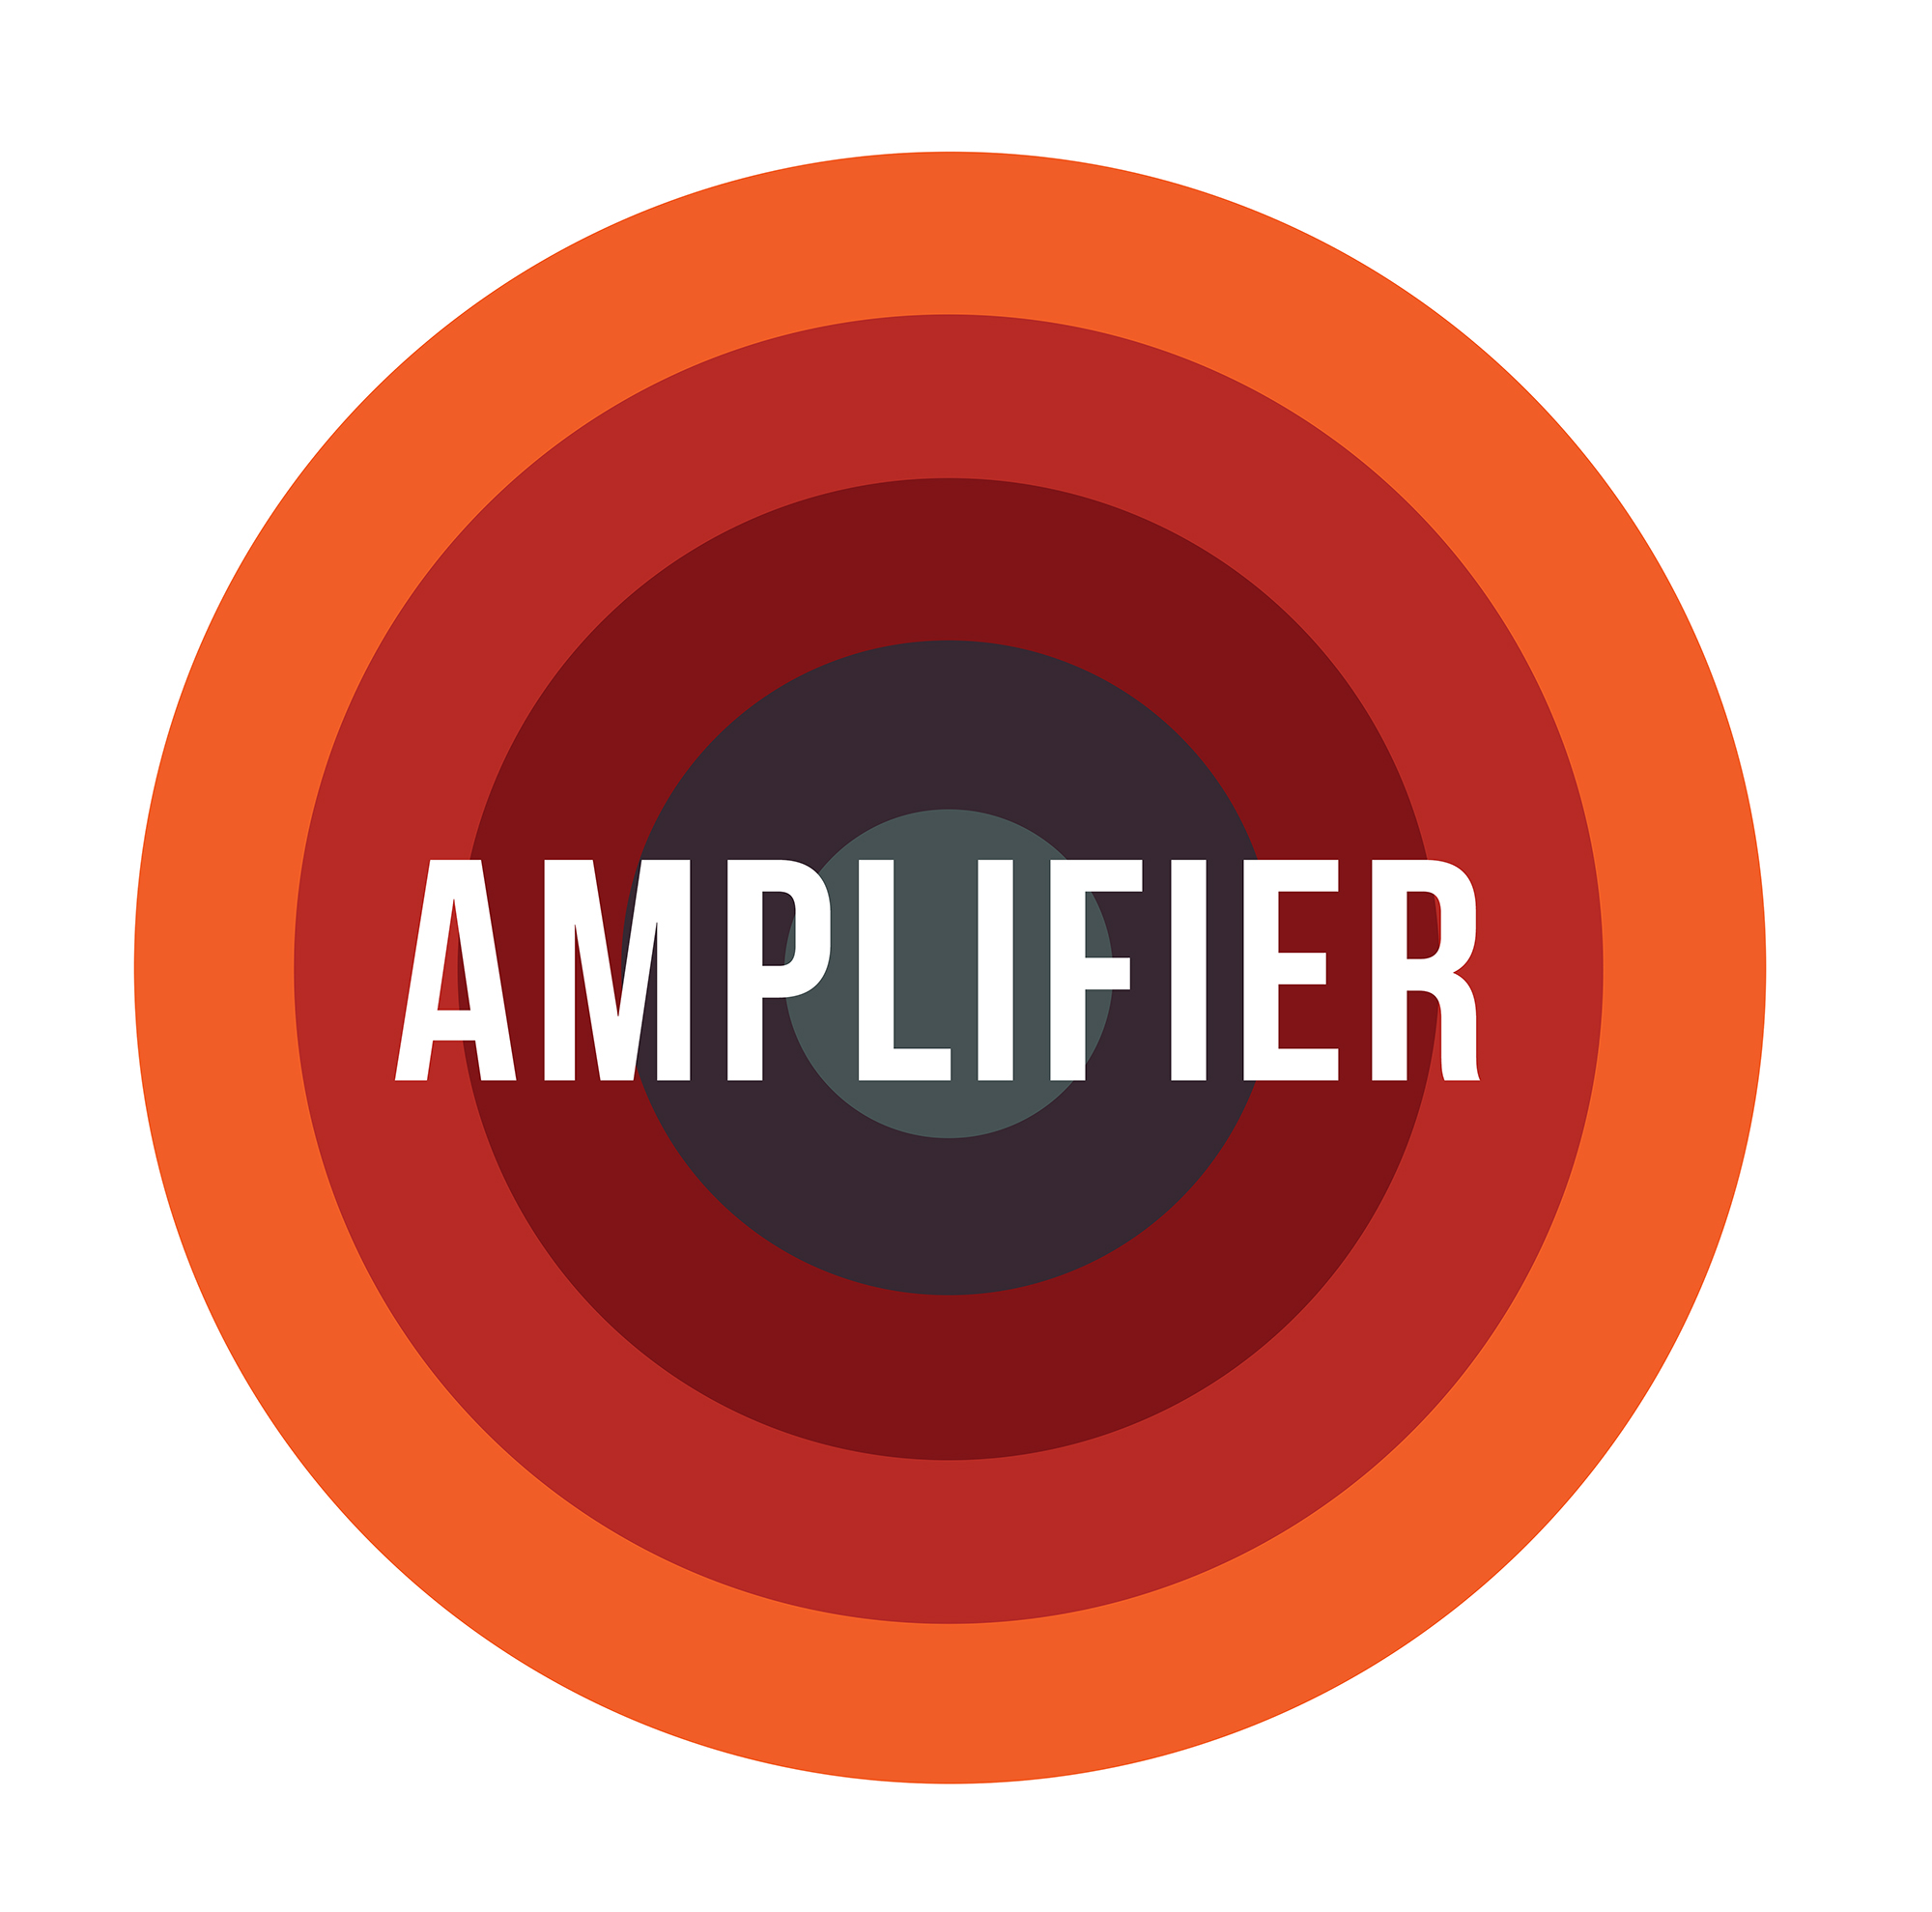 Take Action: Amplifier